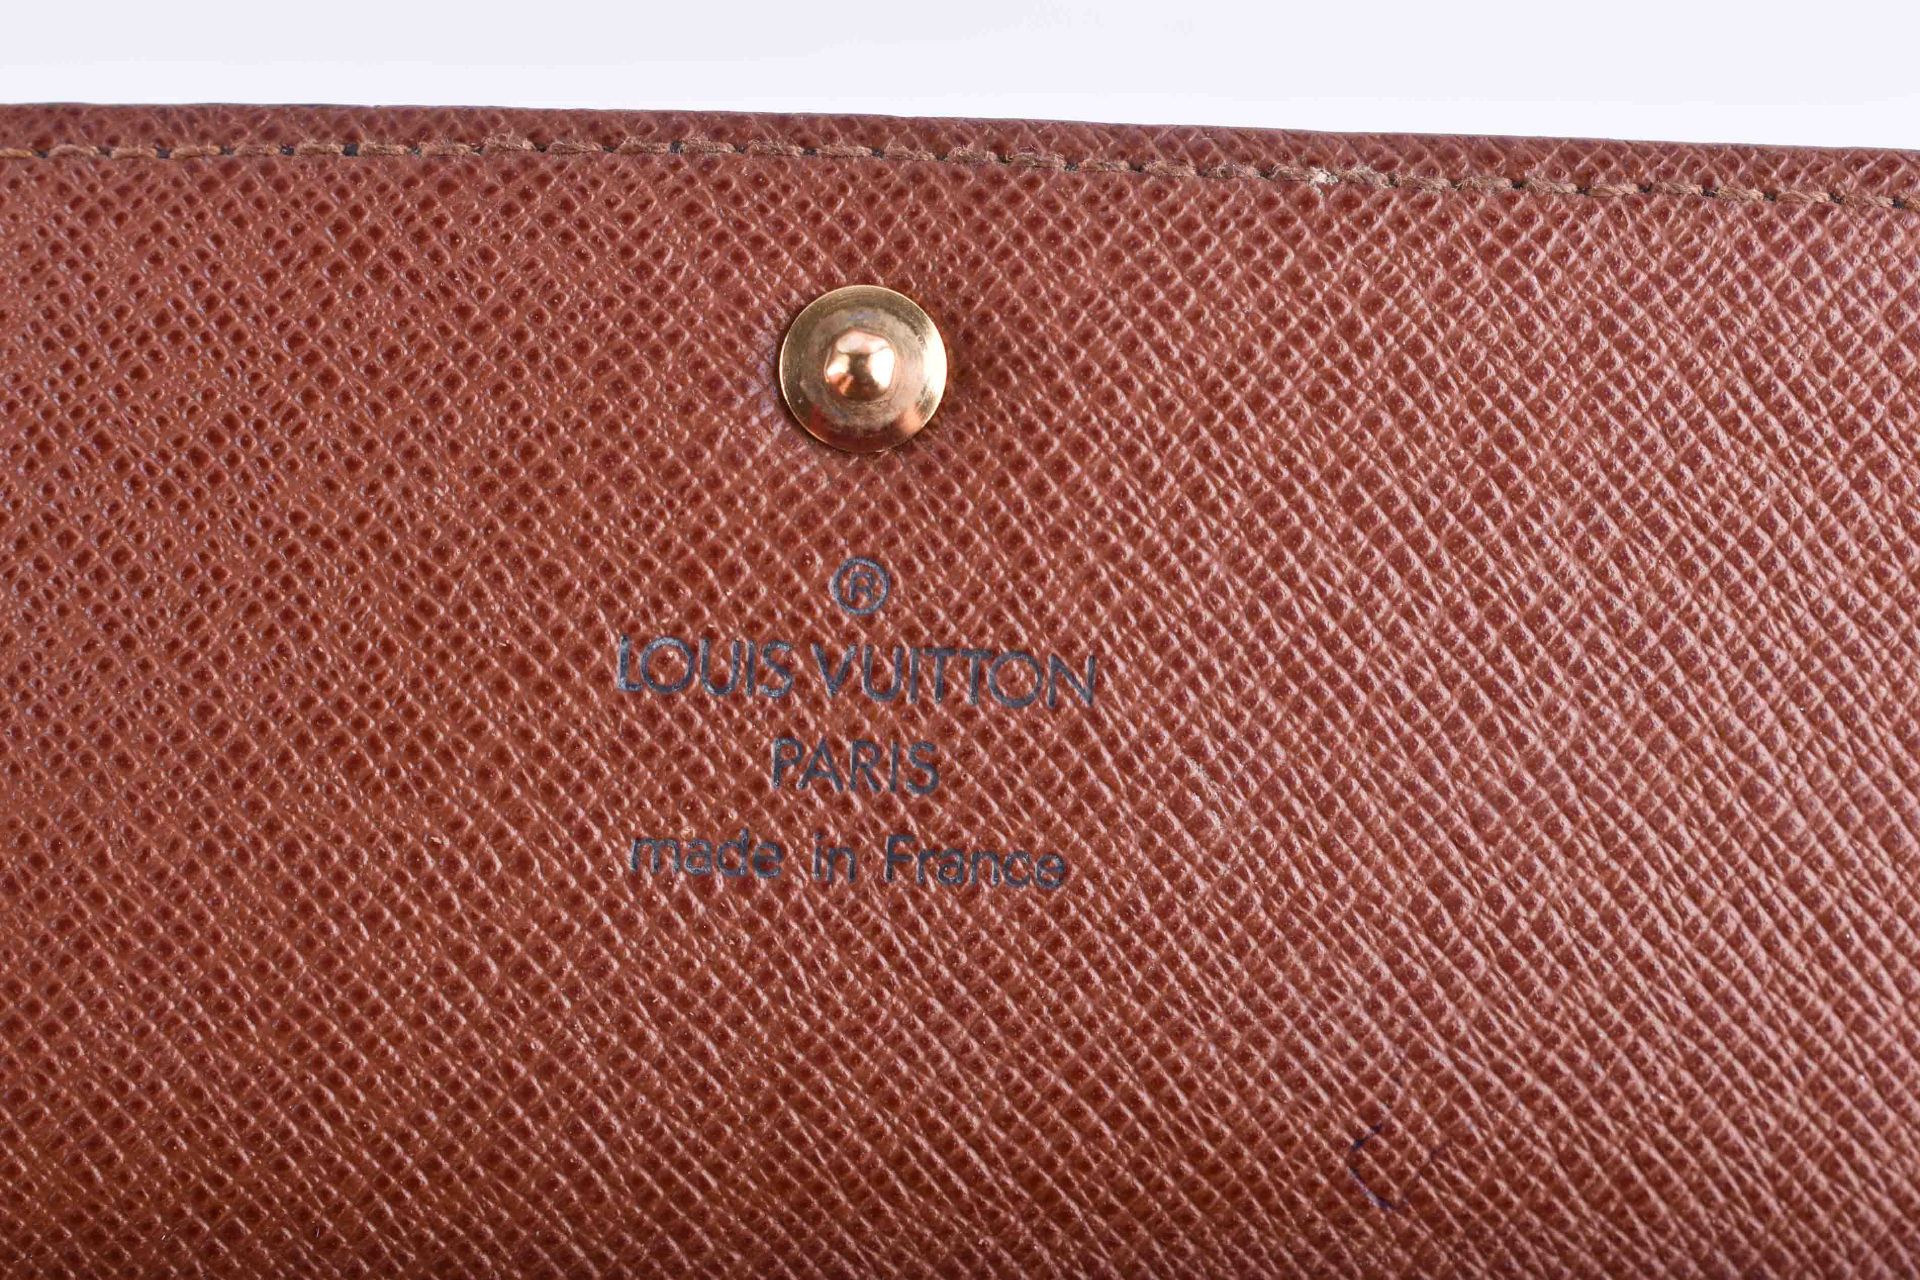  Louis Vuitton wallet - Image 4 of 6